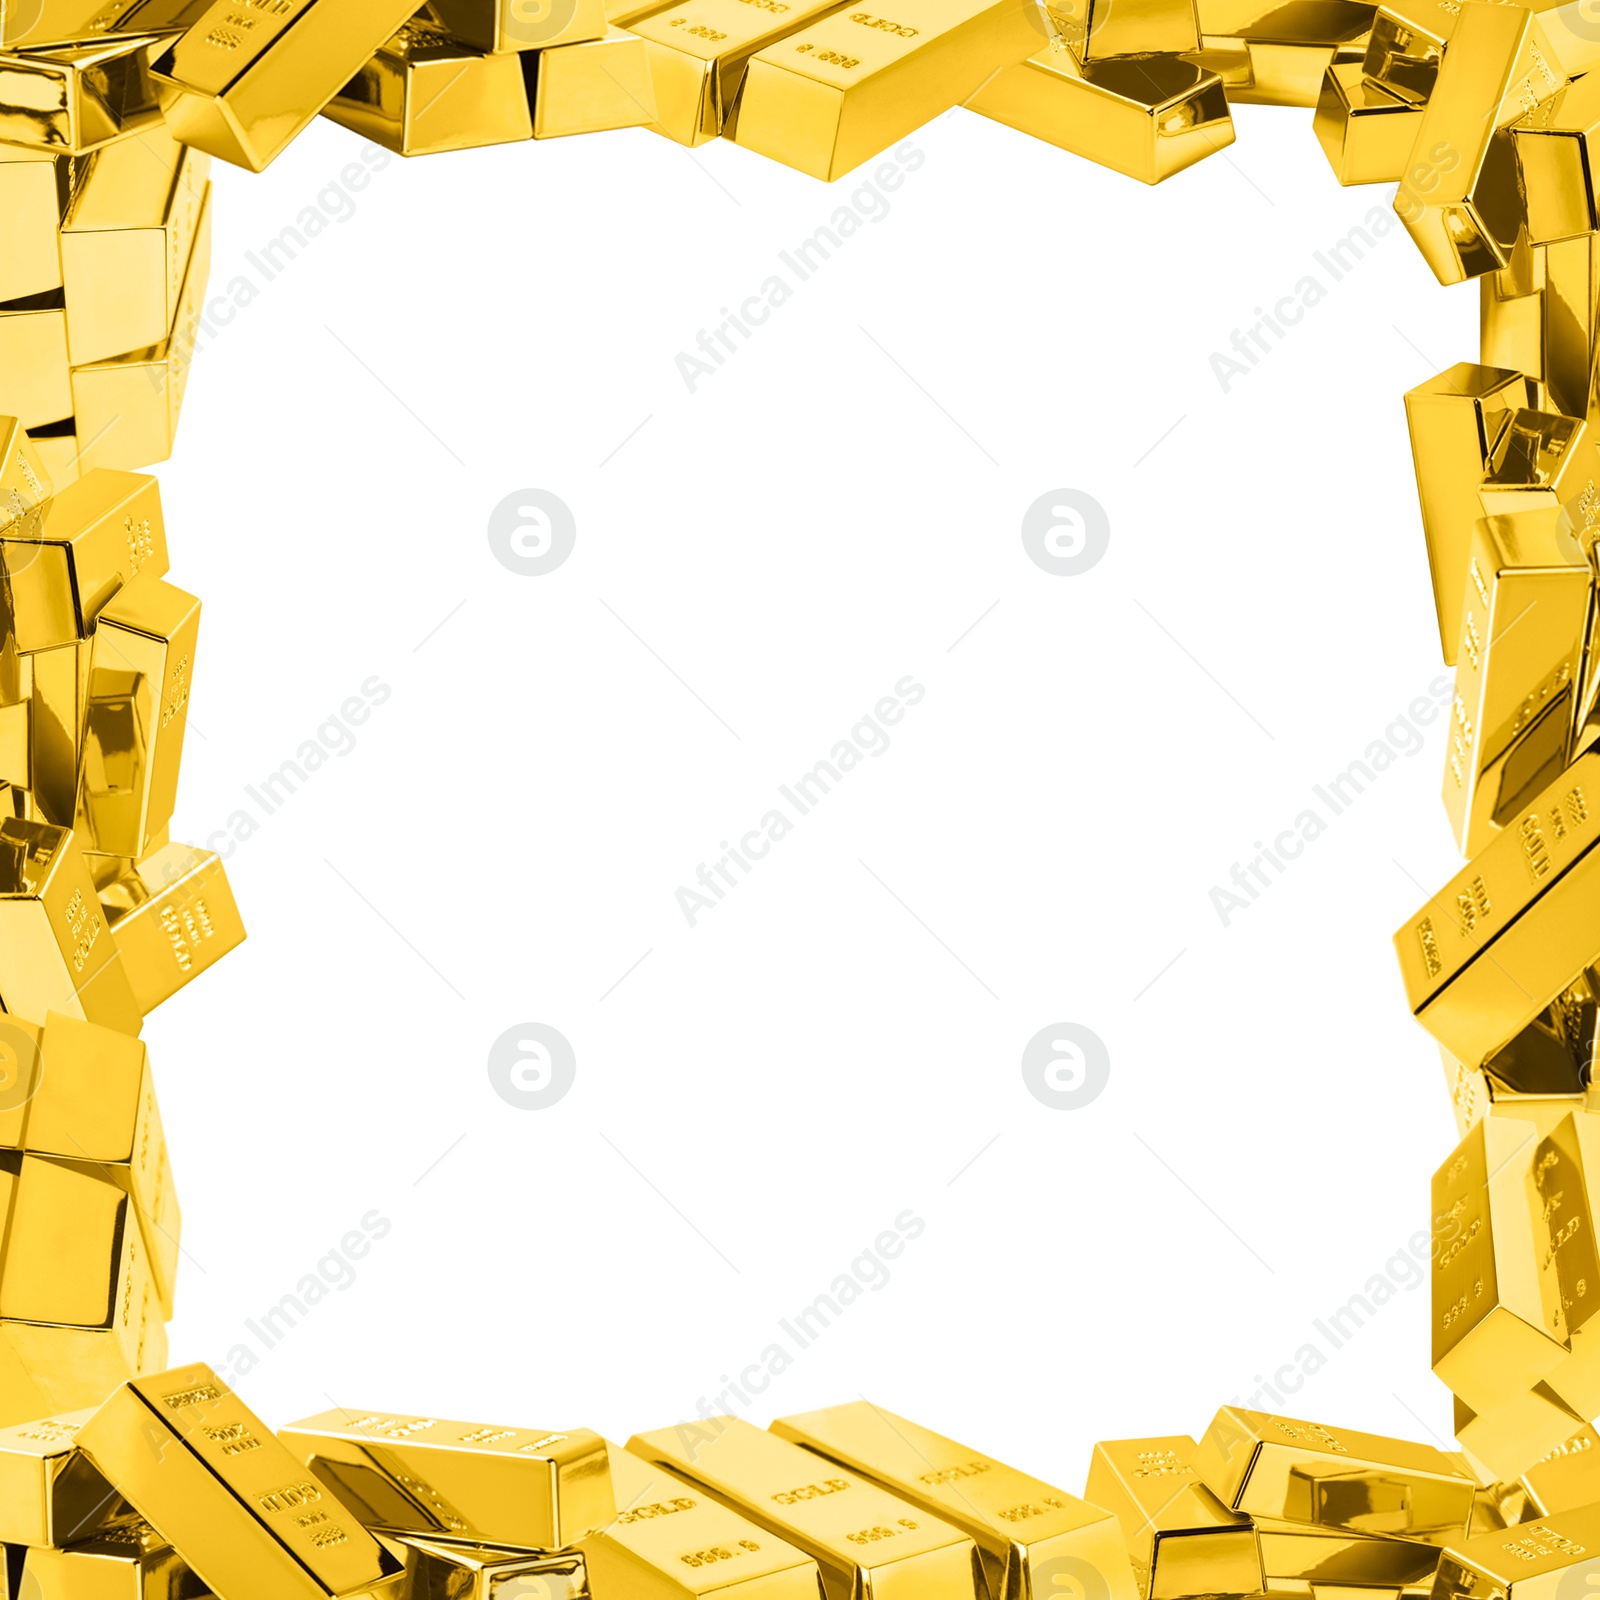 Image of Frame of many golden bars on white background